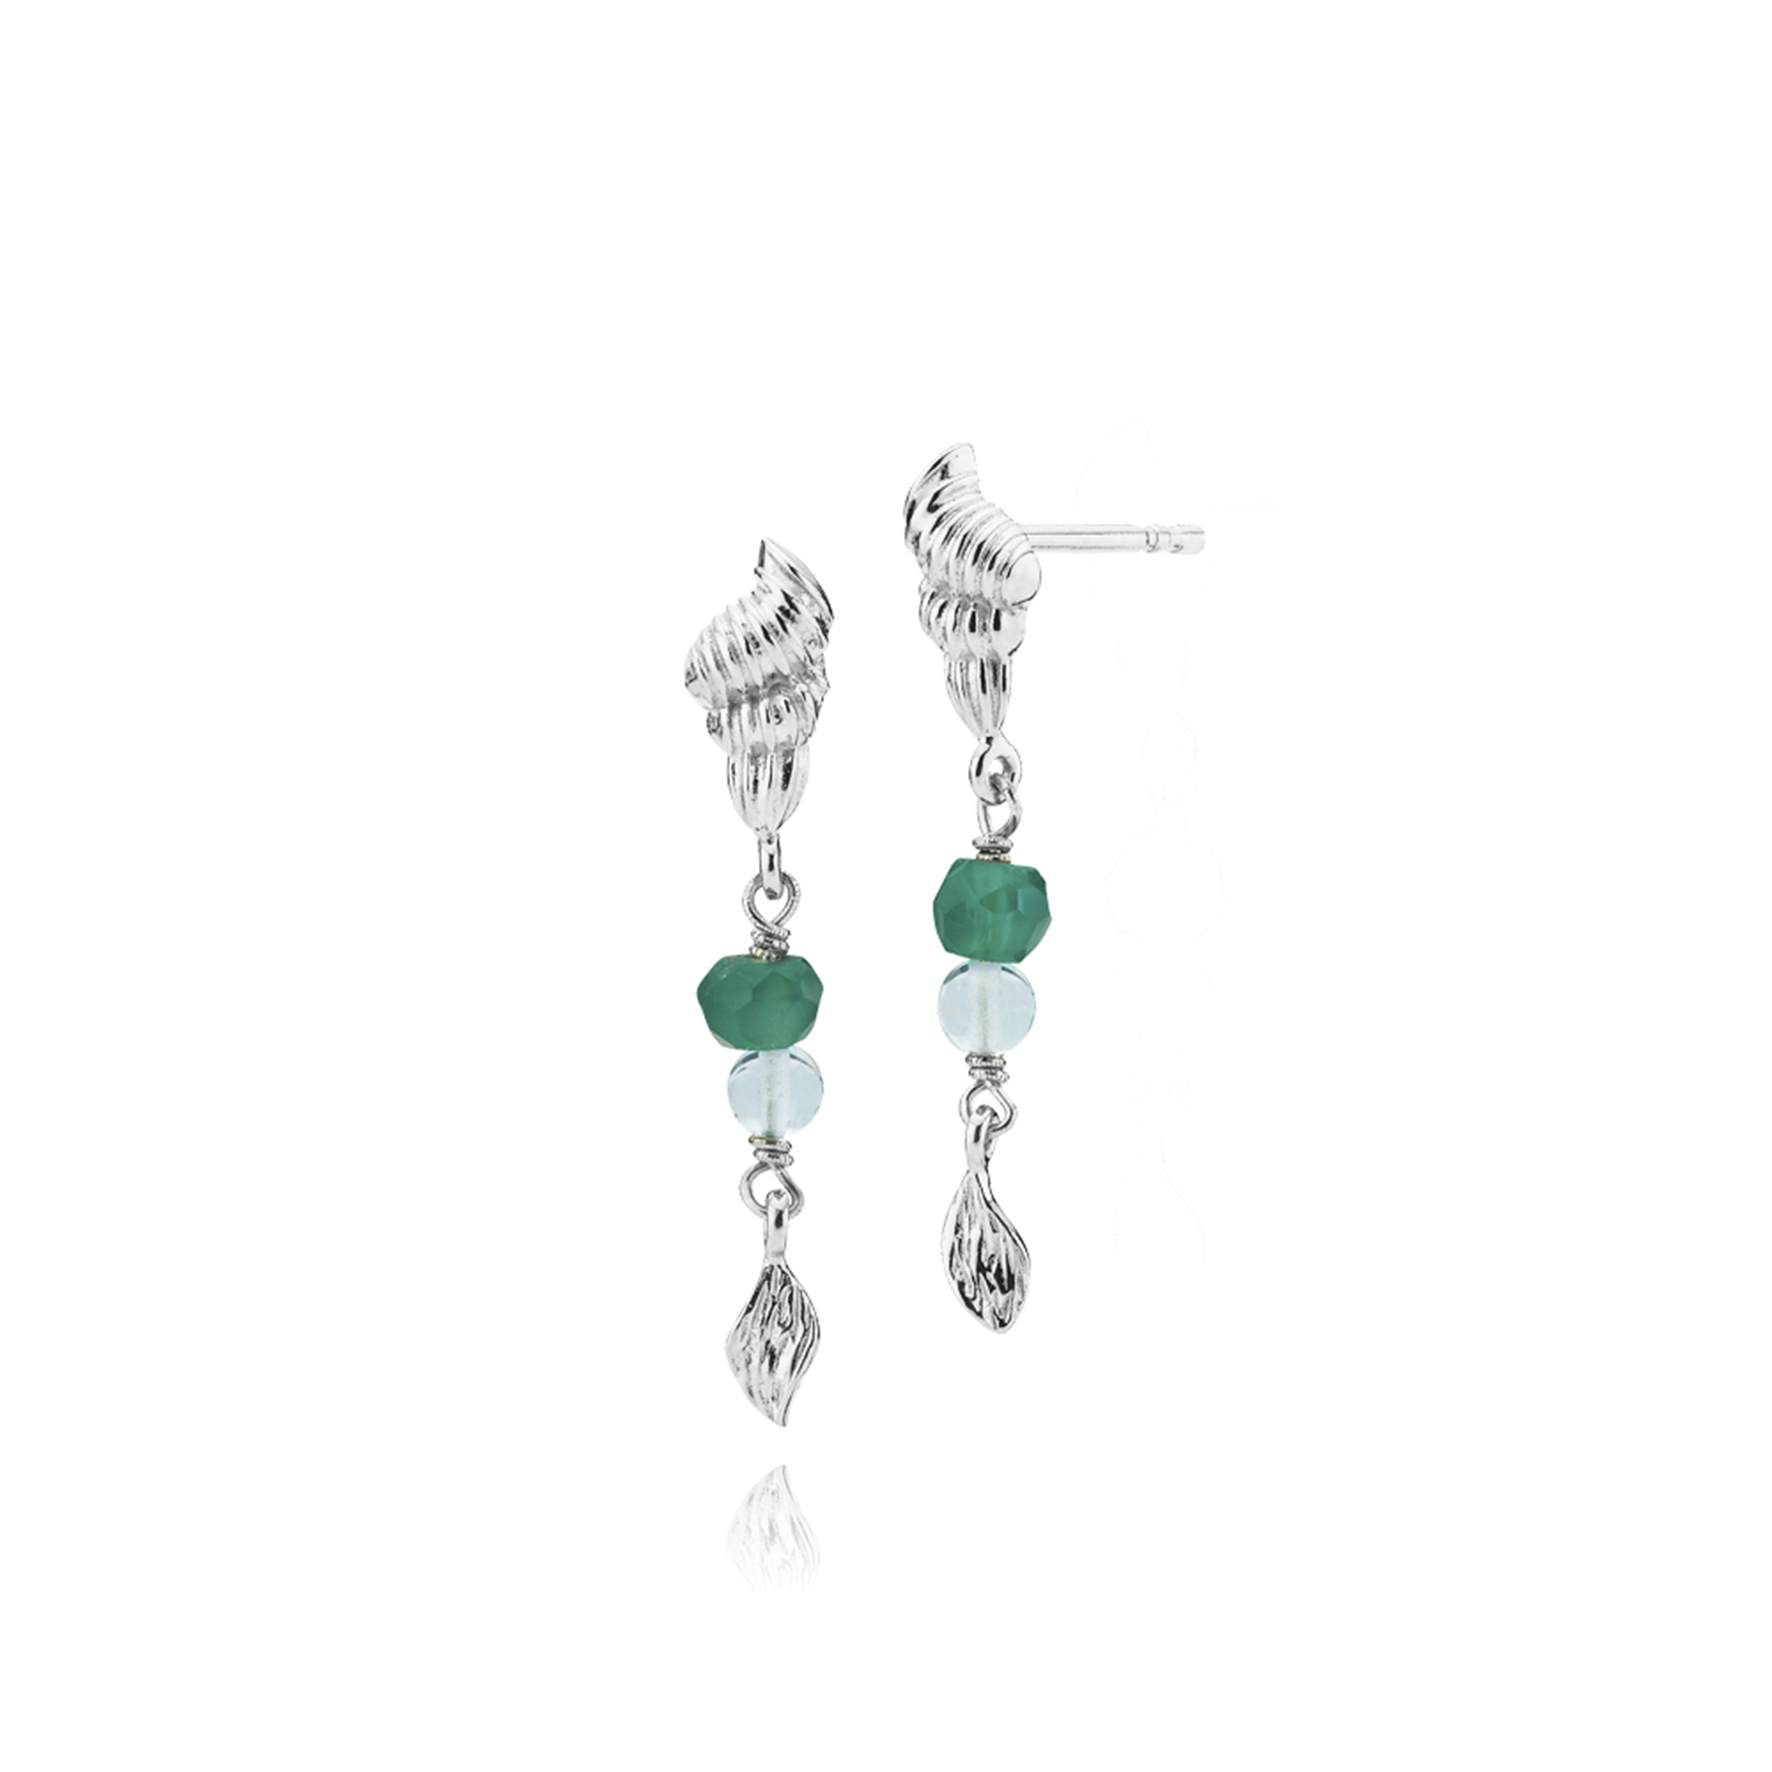 Kaia Earrings Green Onyx and Aqua Crystal från Sistie i Silver Sterling 925